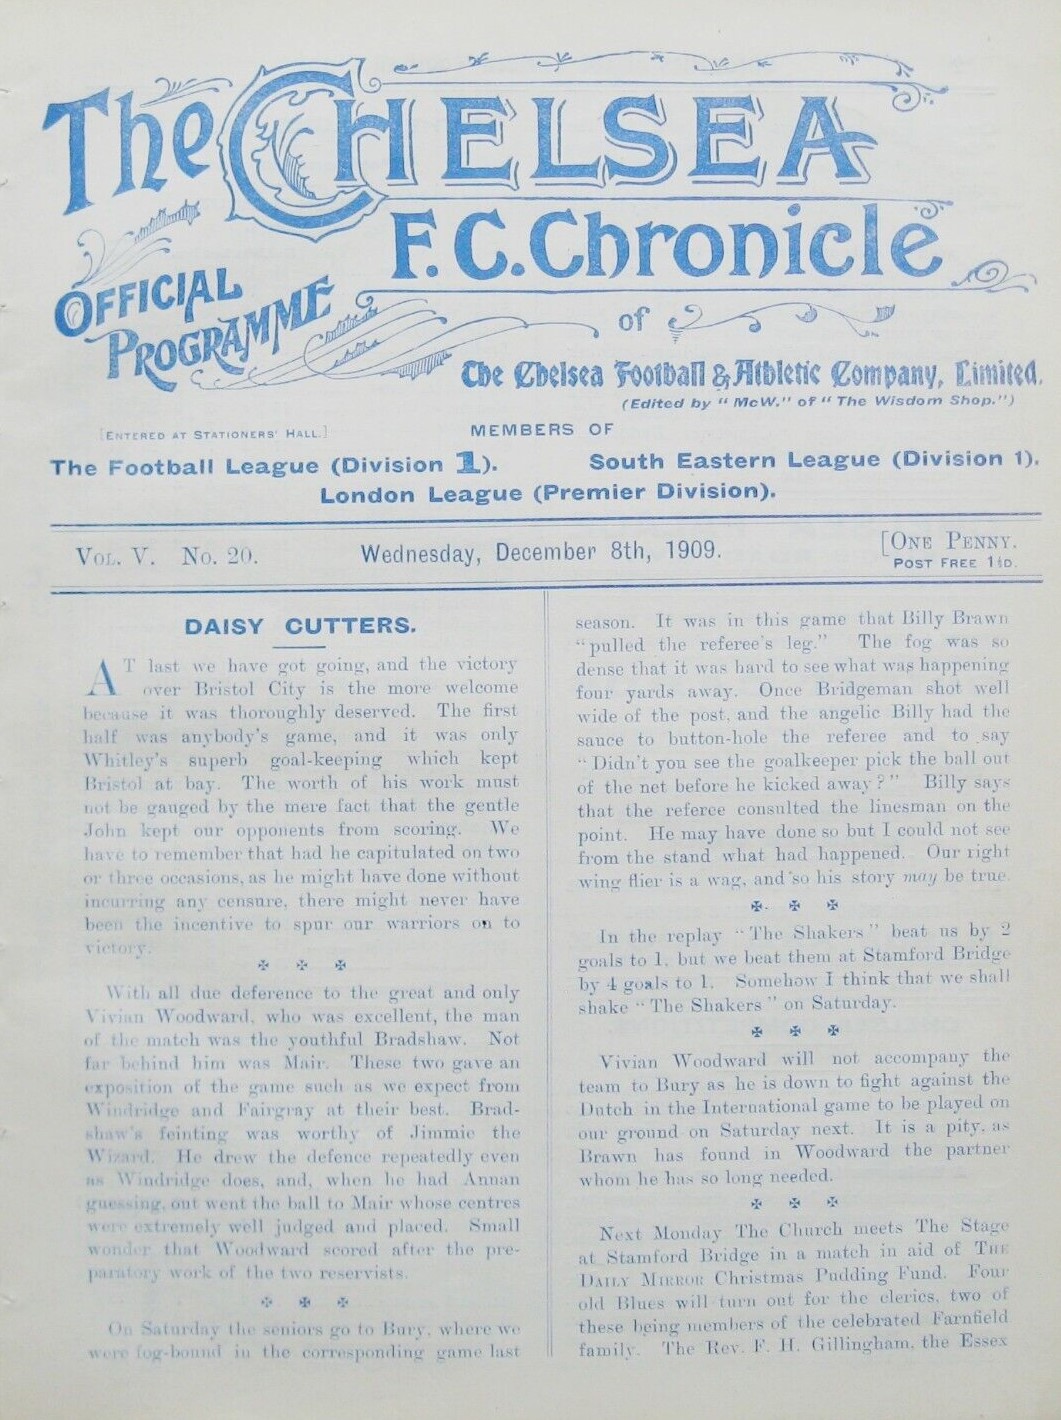 programme cover for Chelsea v Leyton, 8th Dec 1909